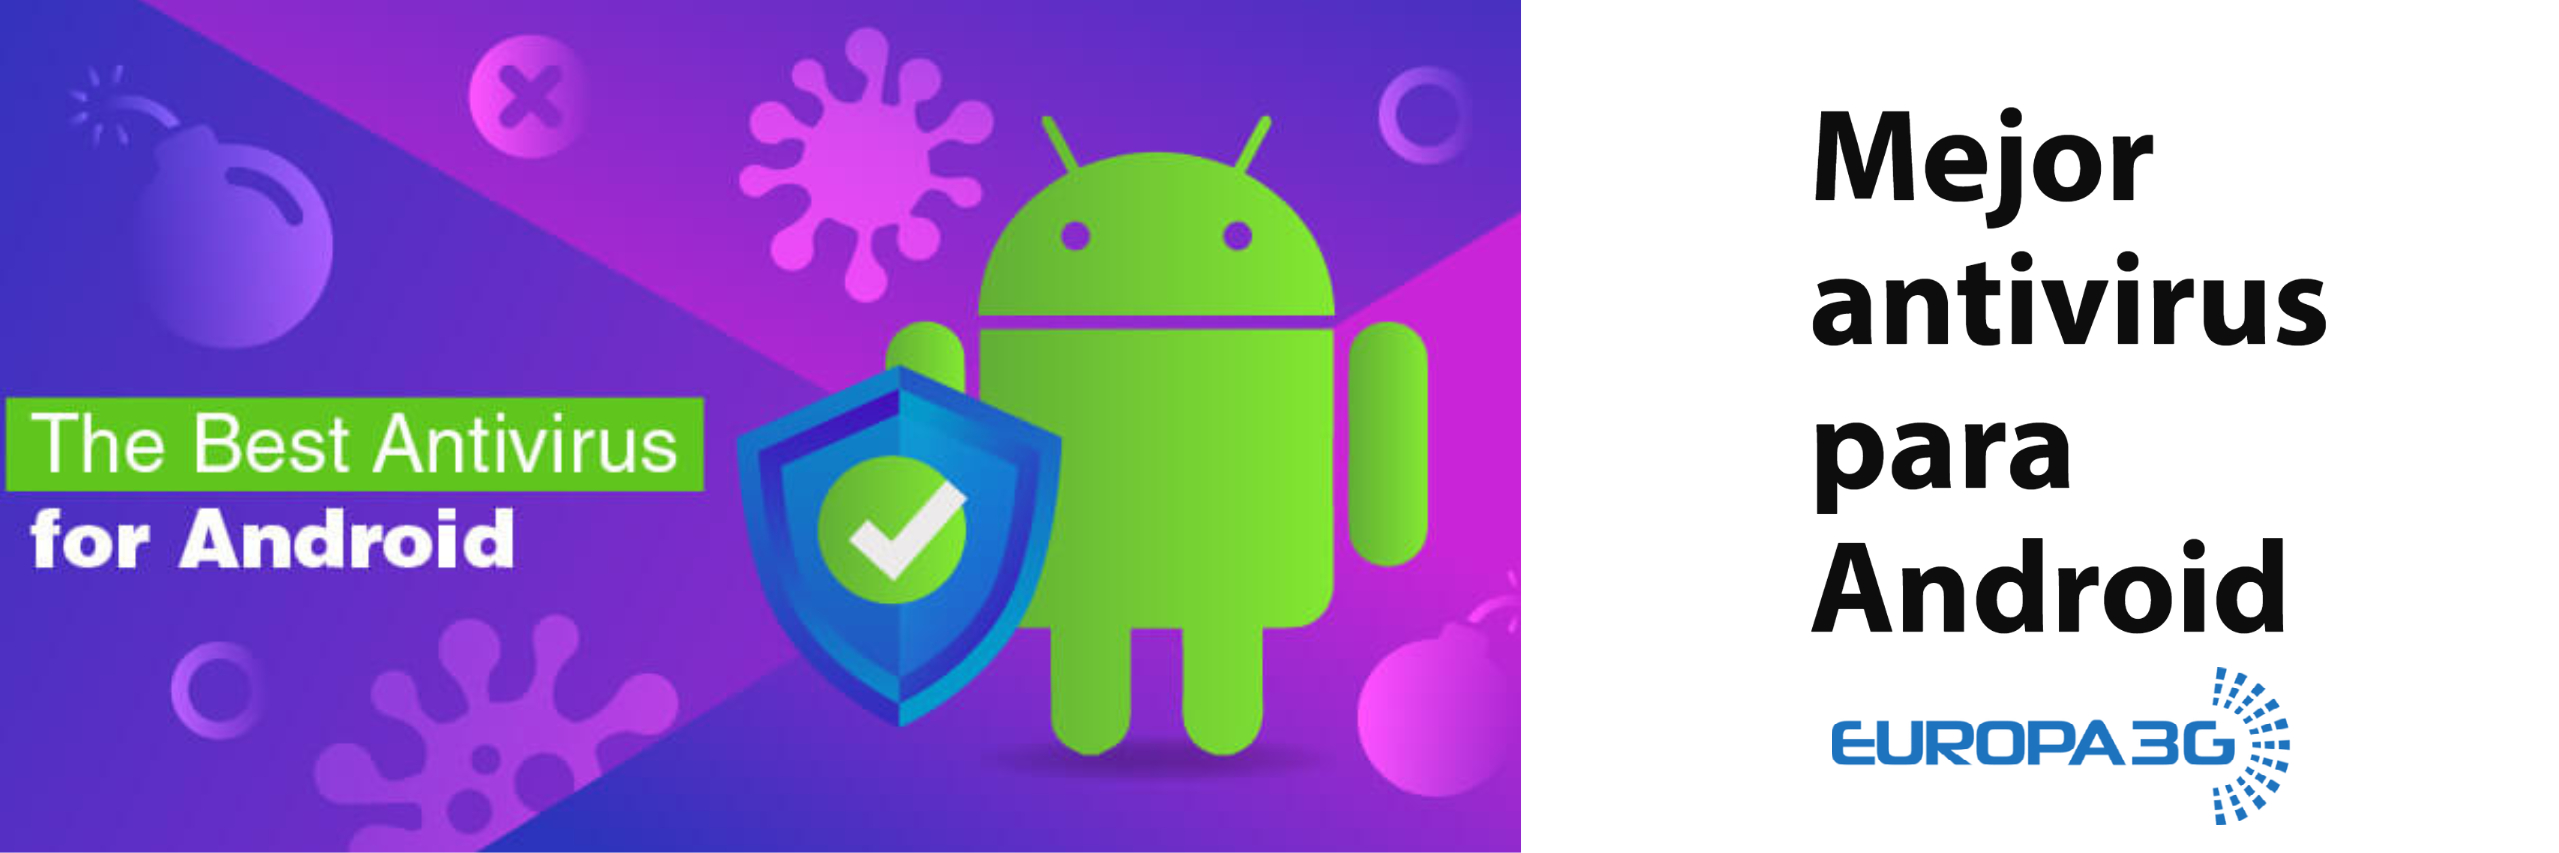 Mejor antivirus para Android